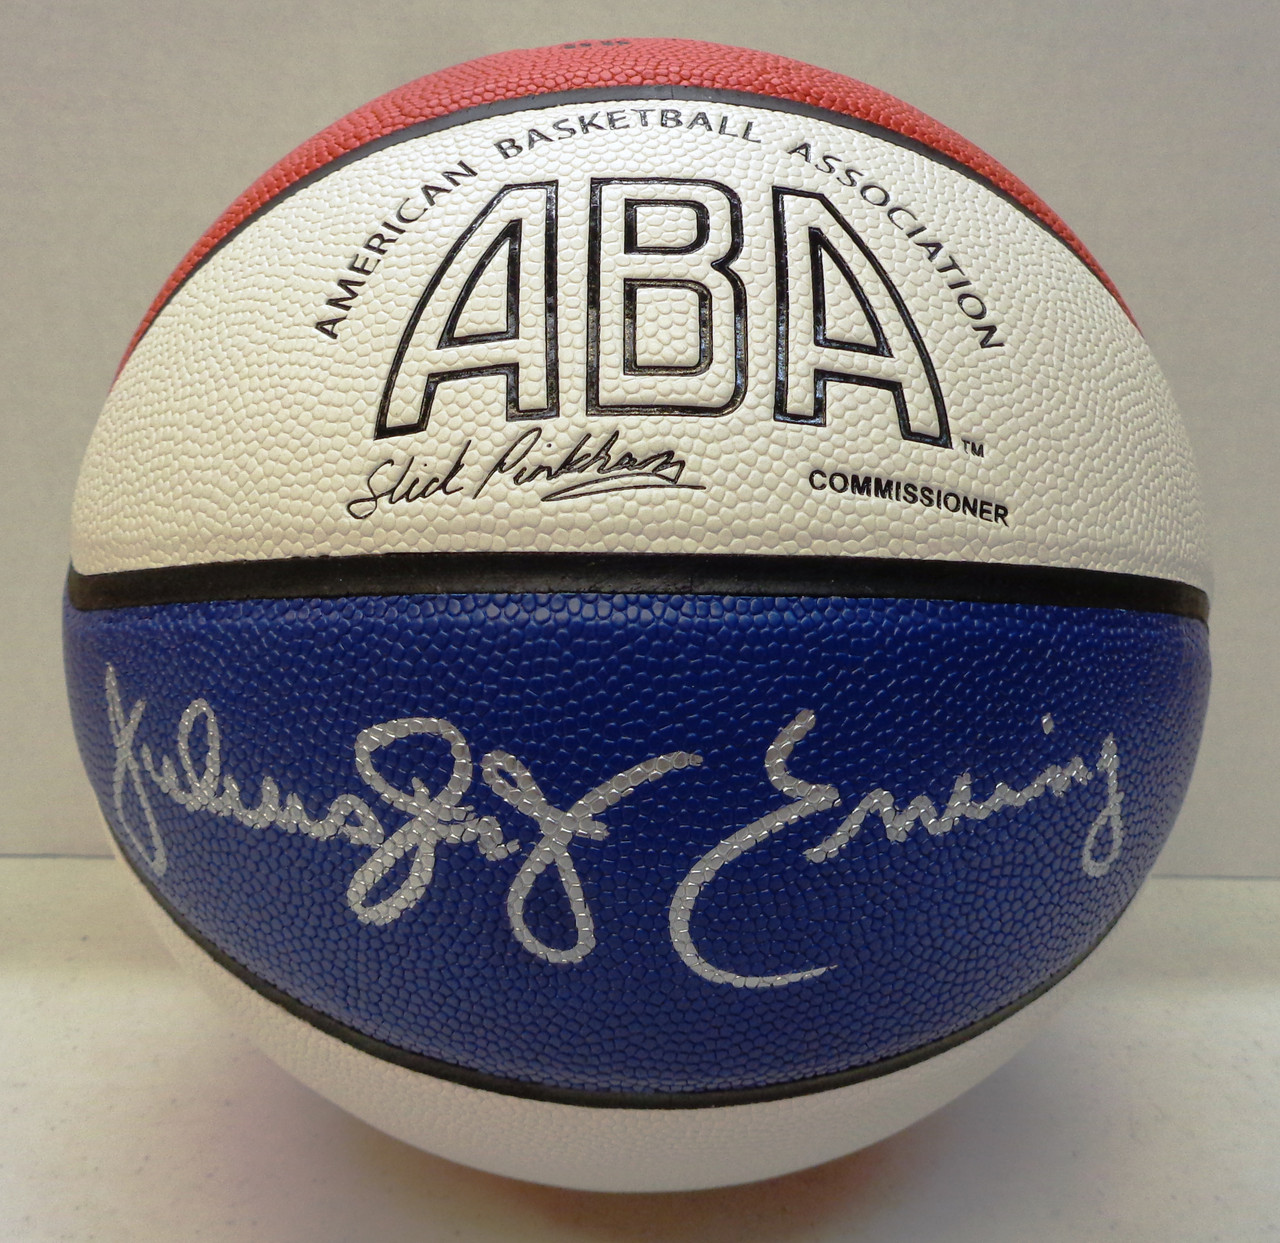 Julius Erving Signed Full-Size Spalding ABA Basketball (Beckett LOA)